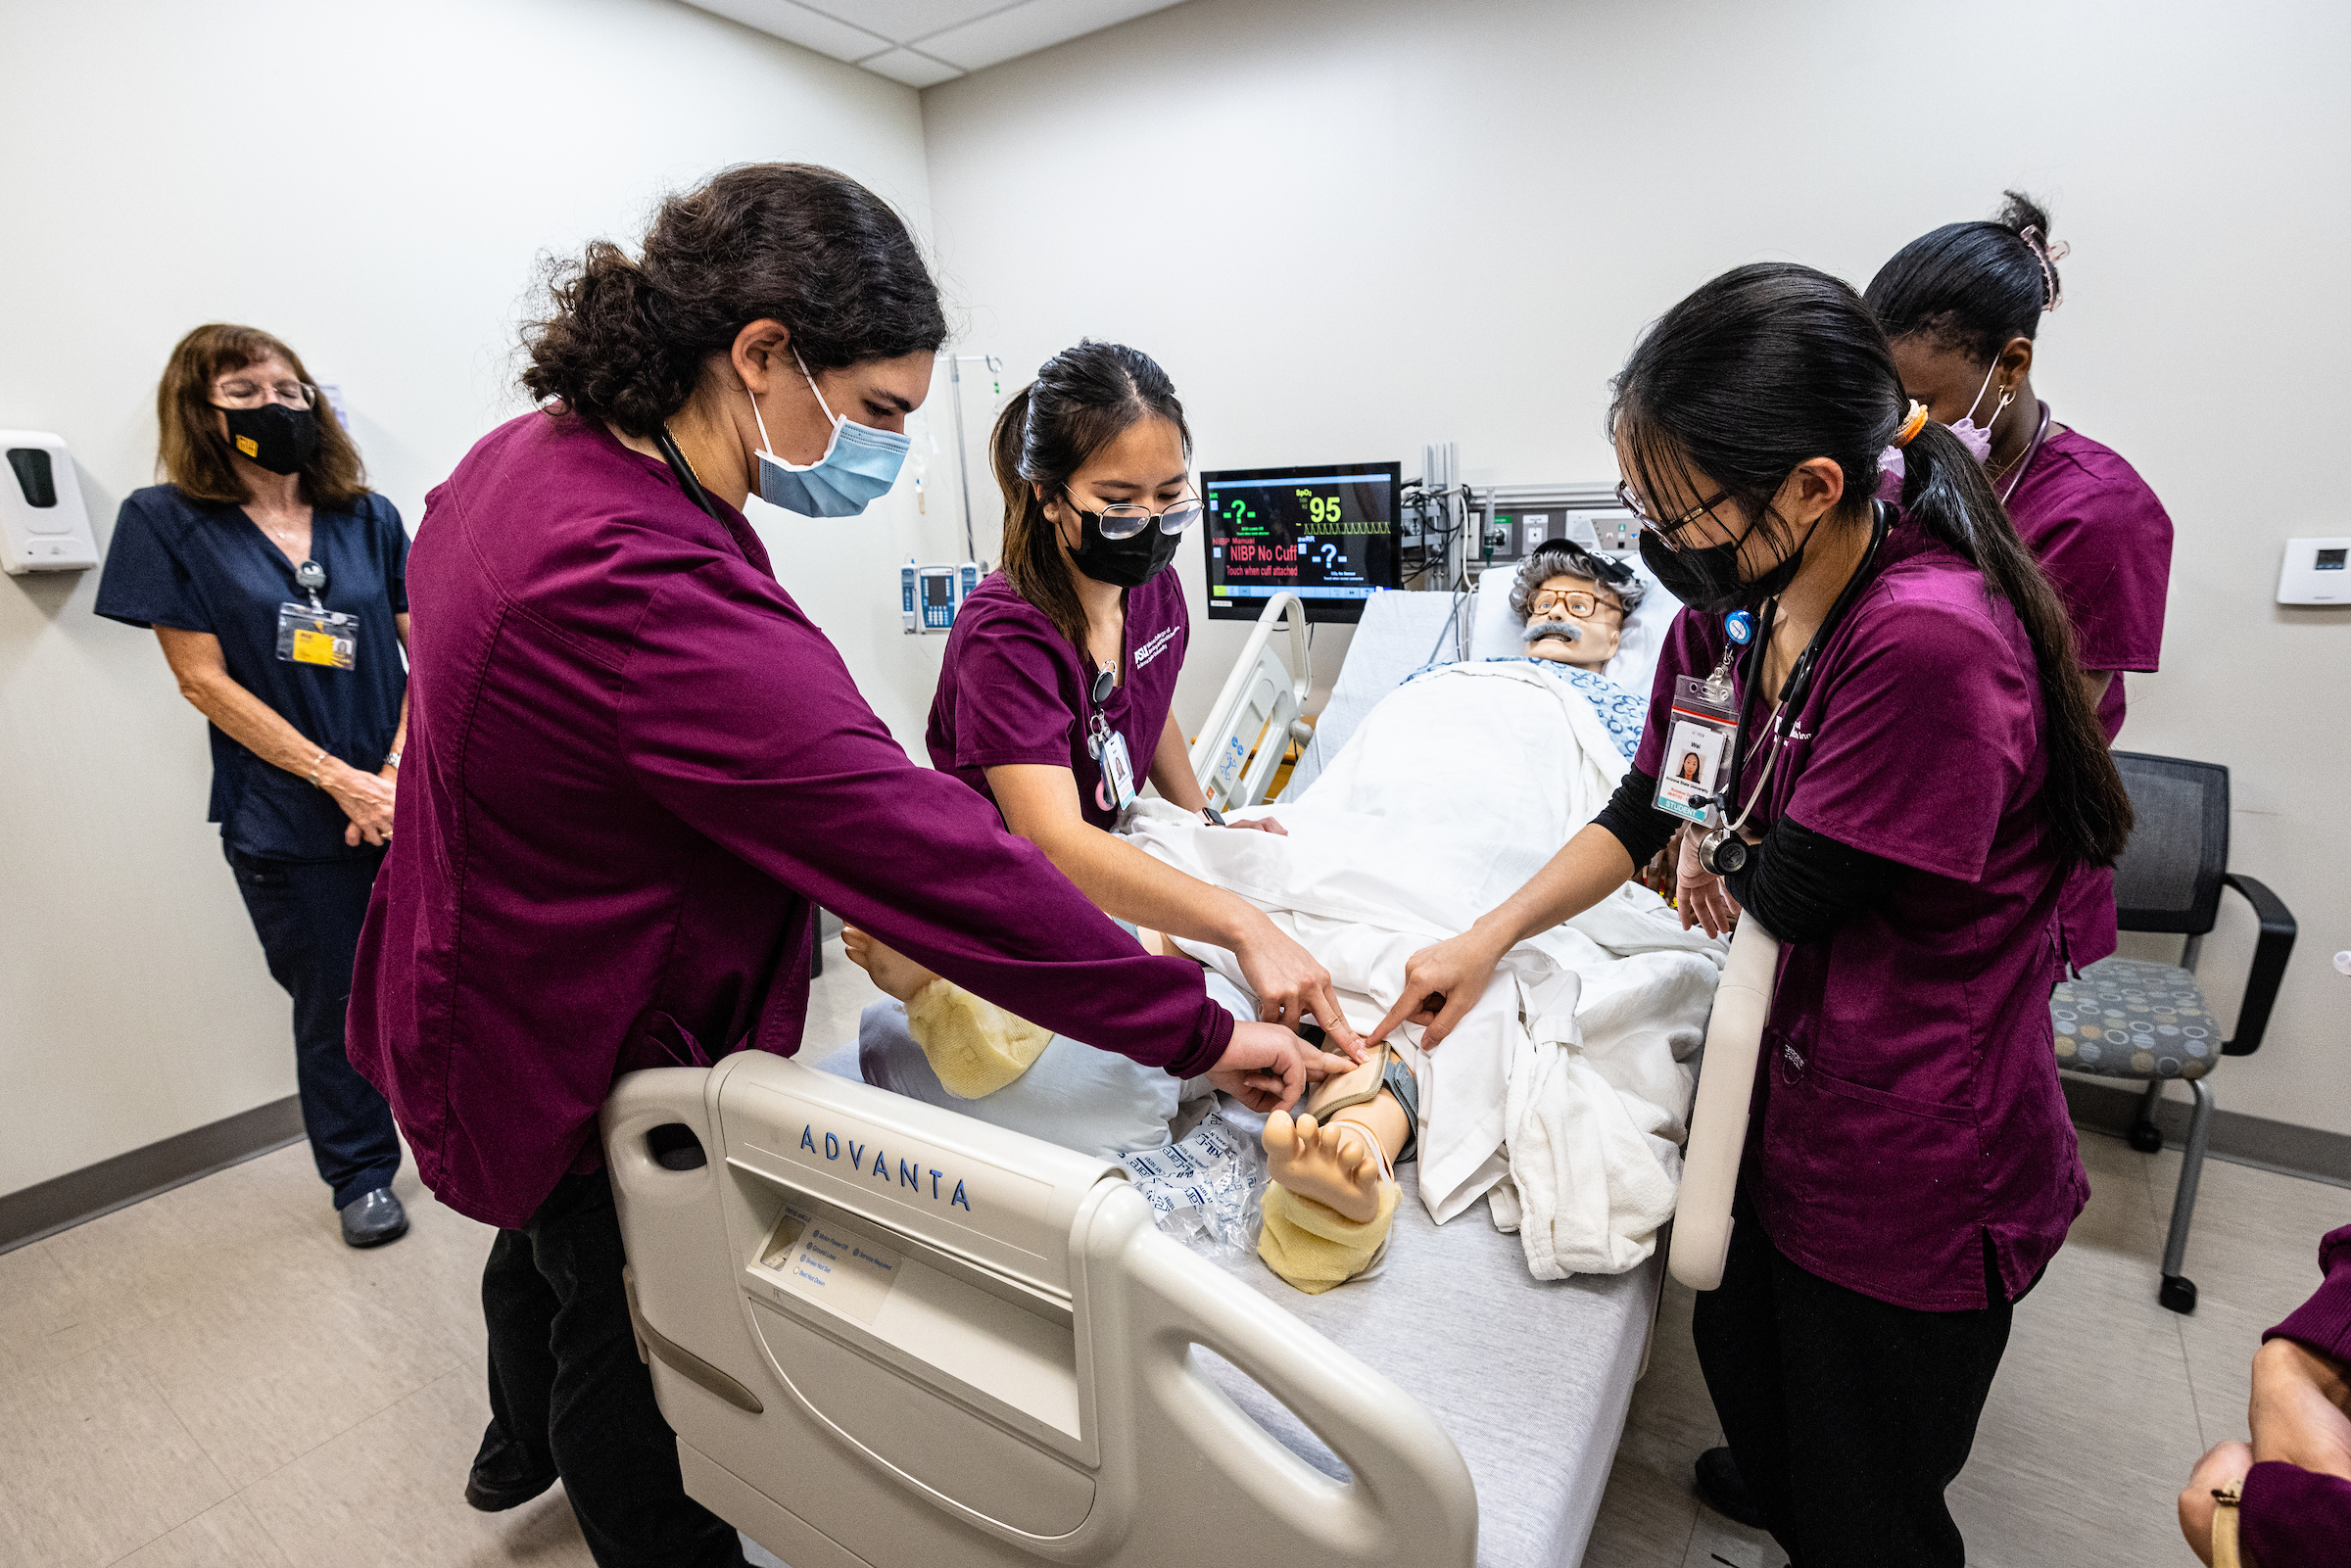 students working on a nursing manikin